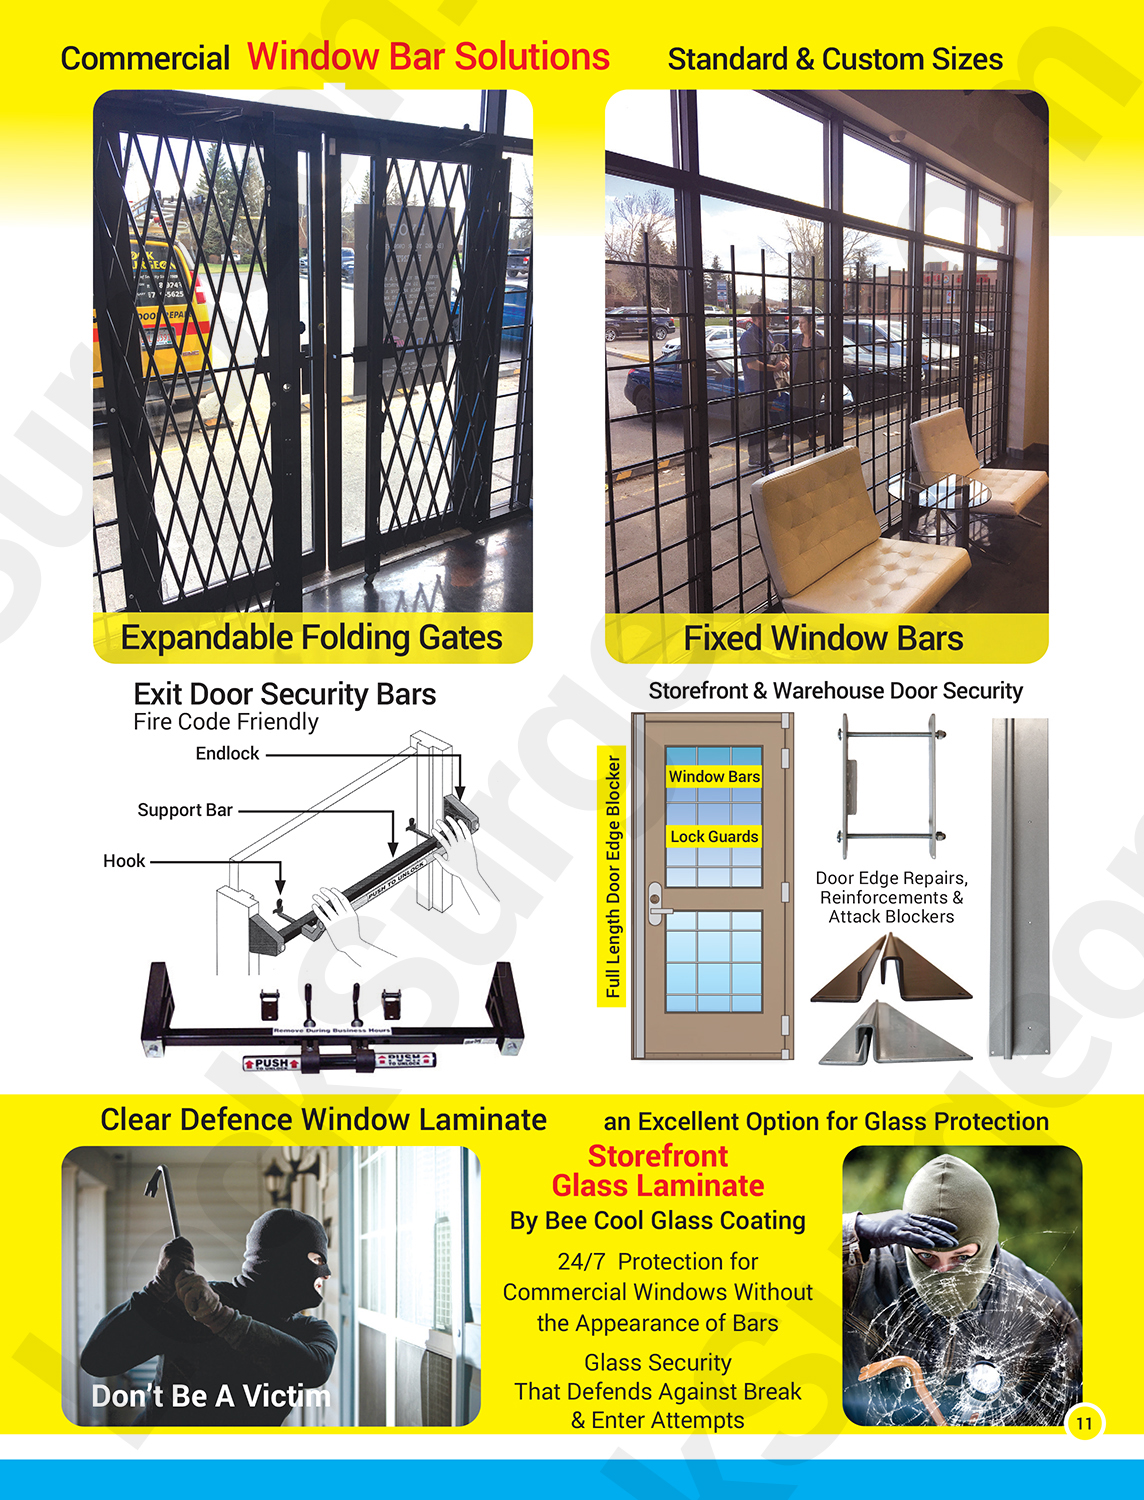 Window bar solutions standard & custom size expandable folding gates exit door security bars Acheson